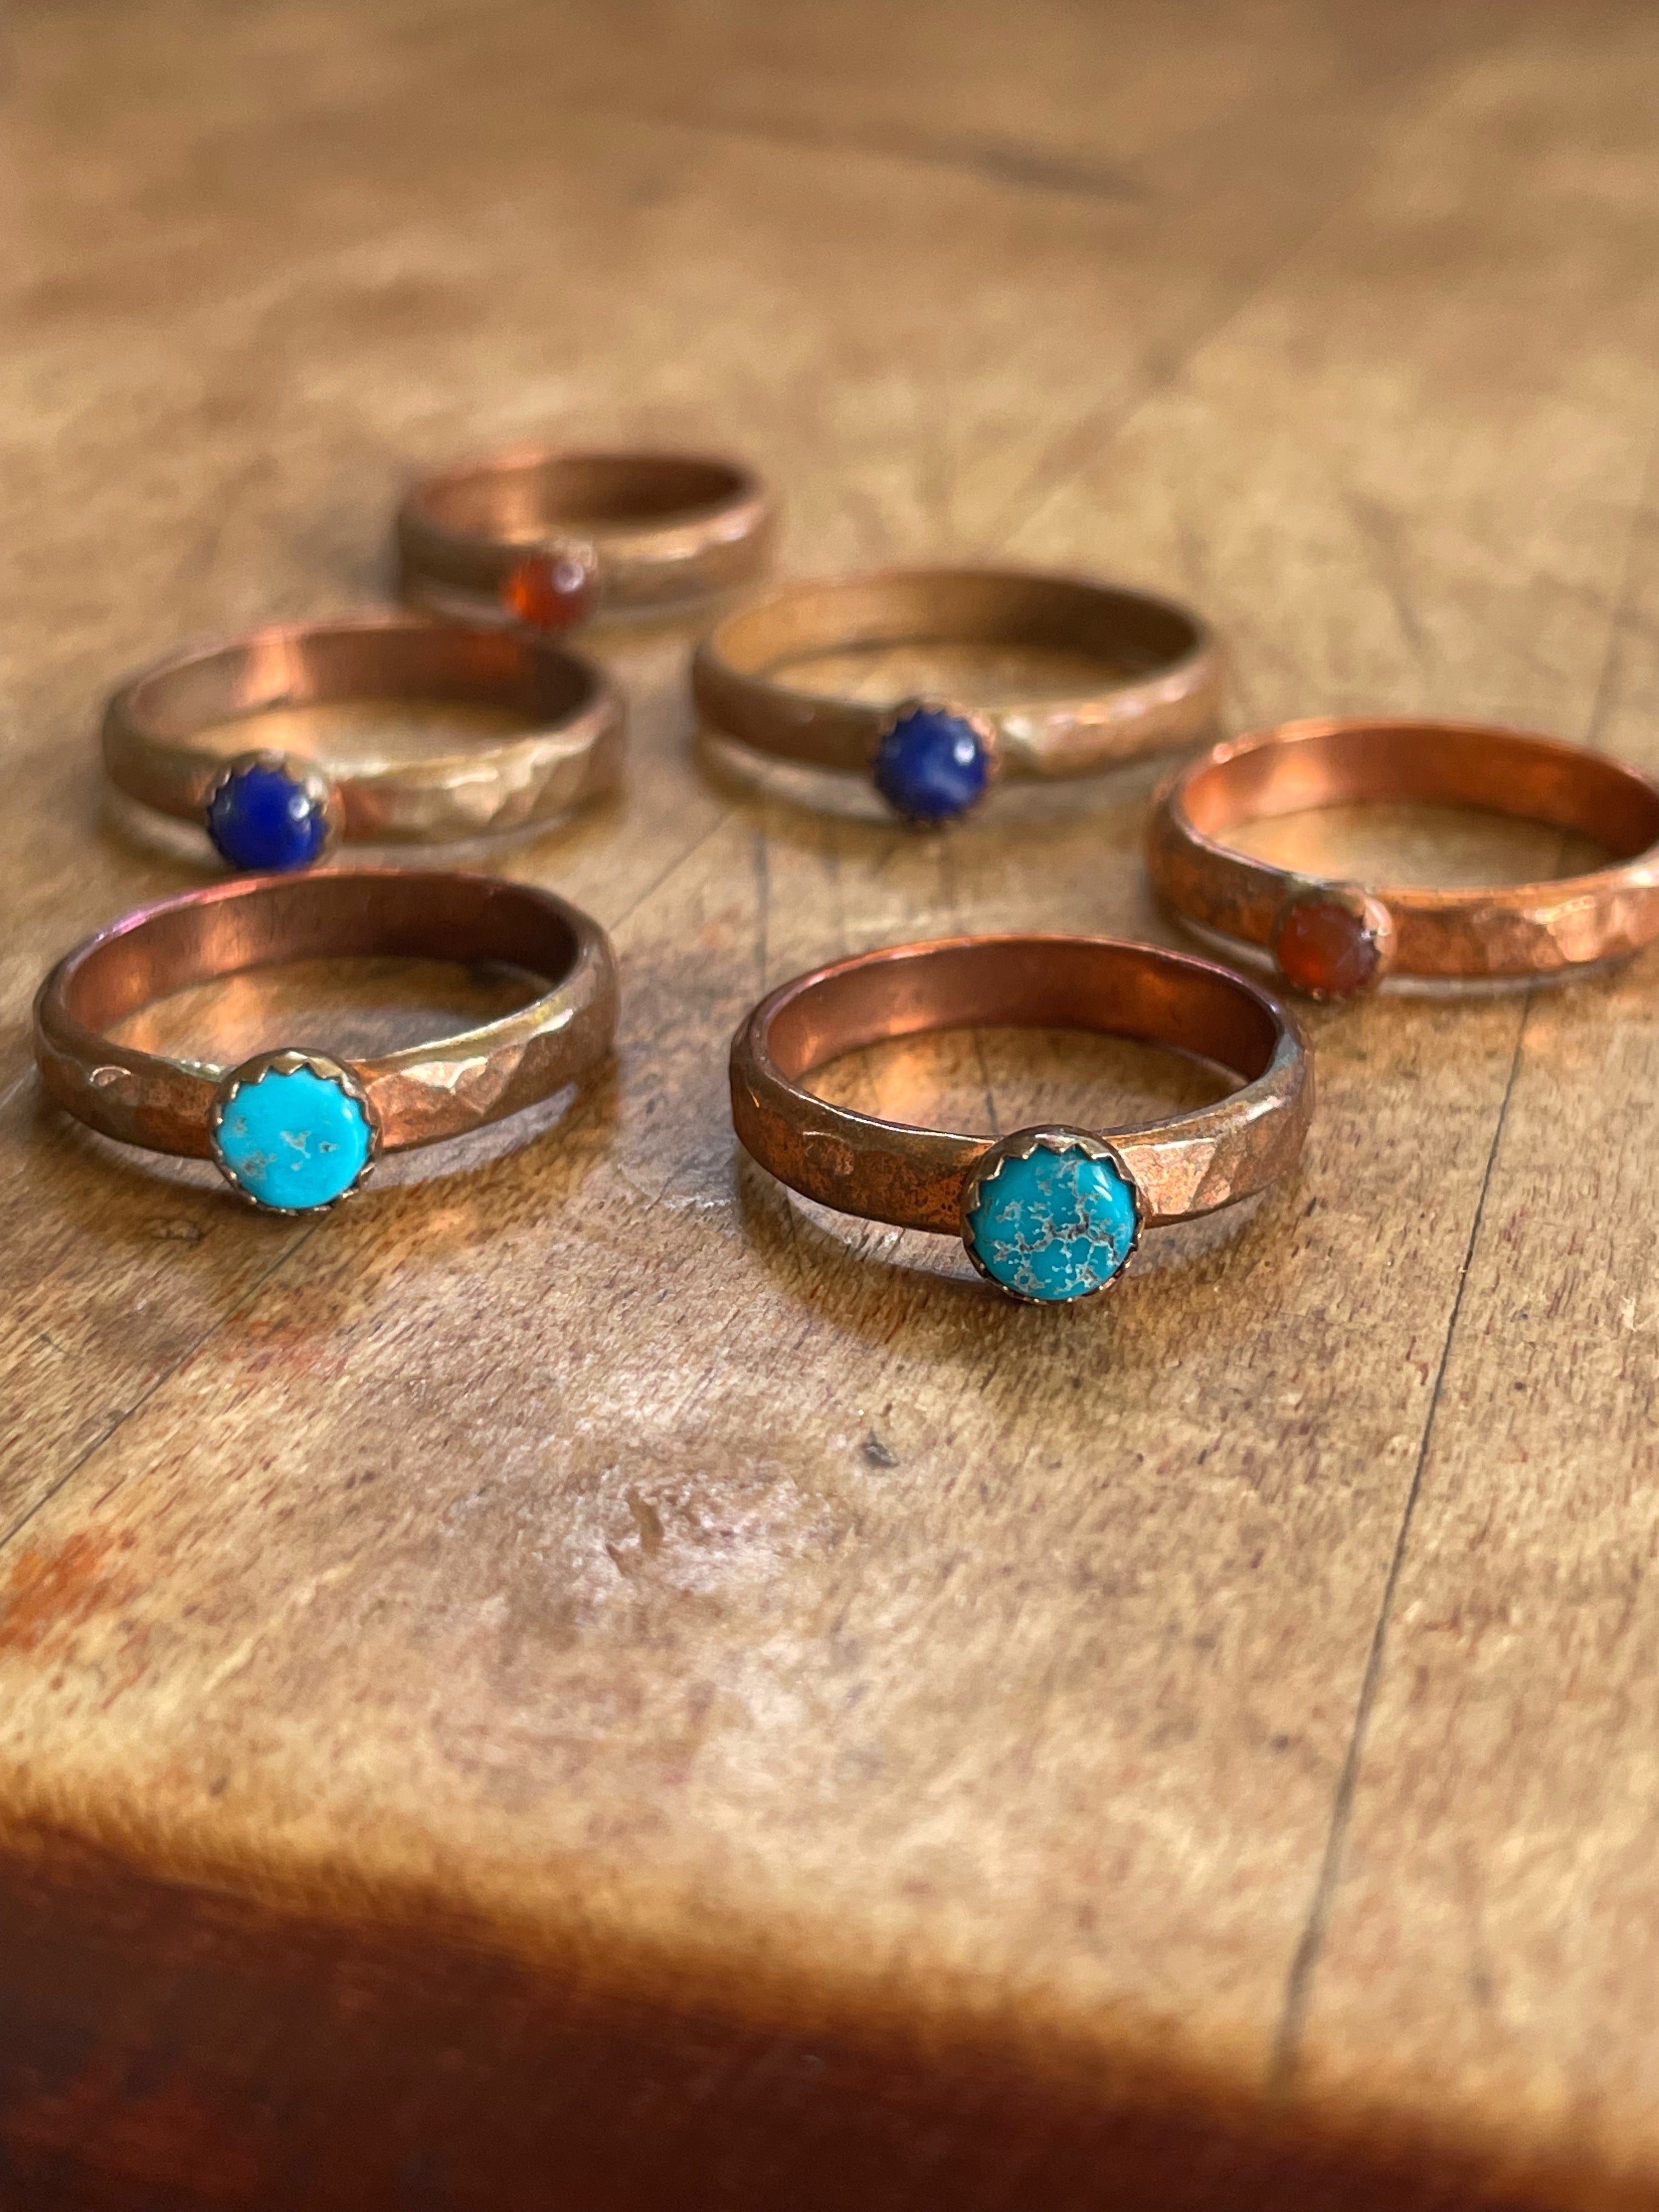 Custom crafted gem rings by MattyRo.com